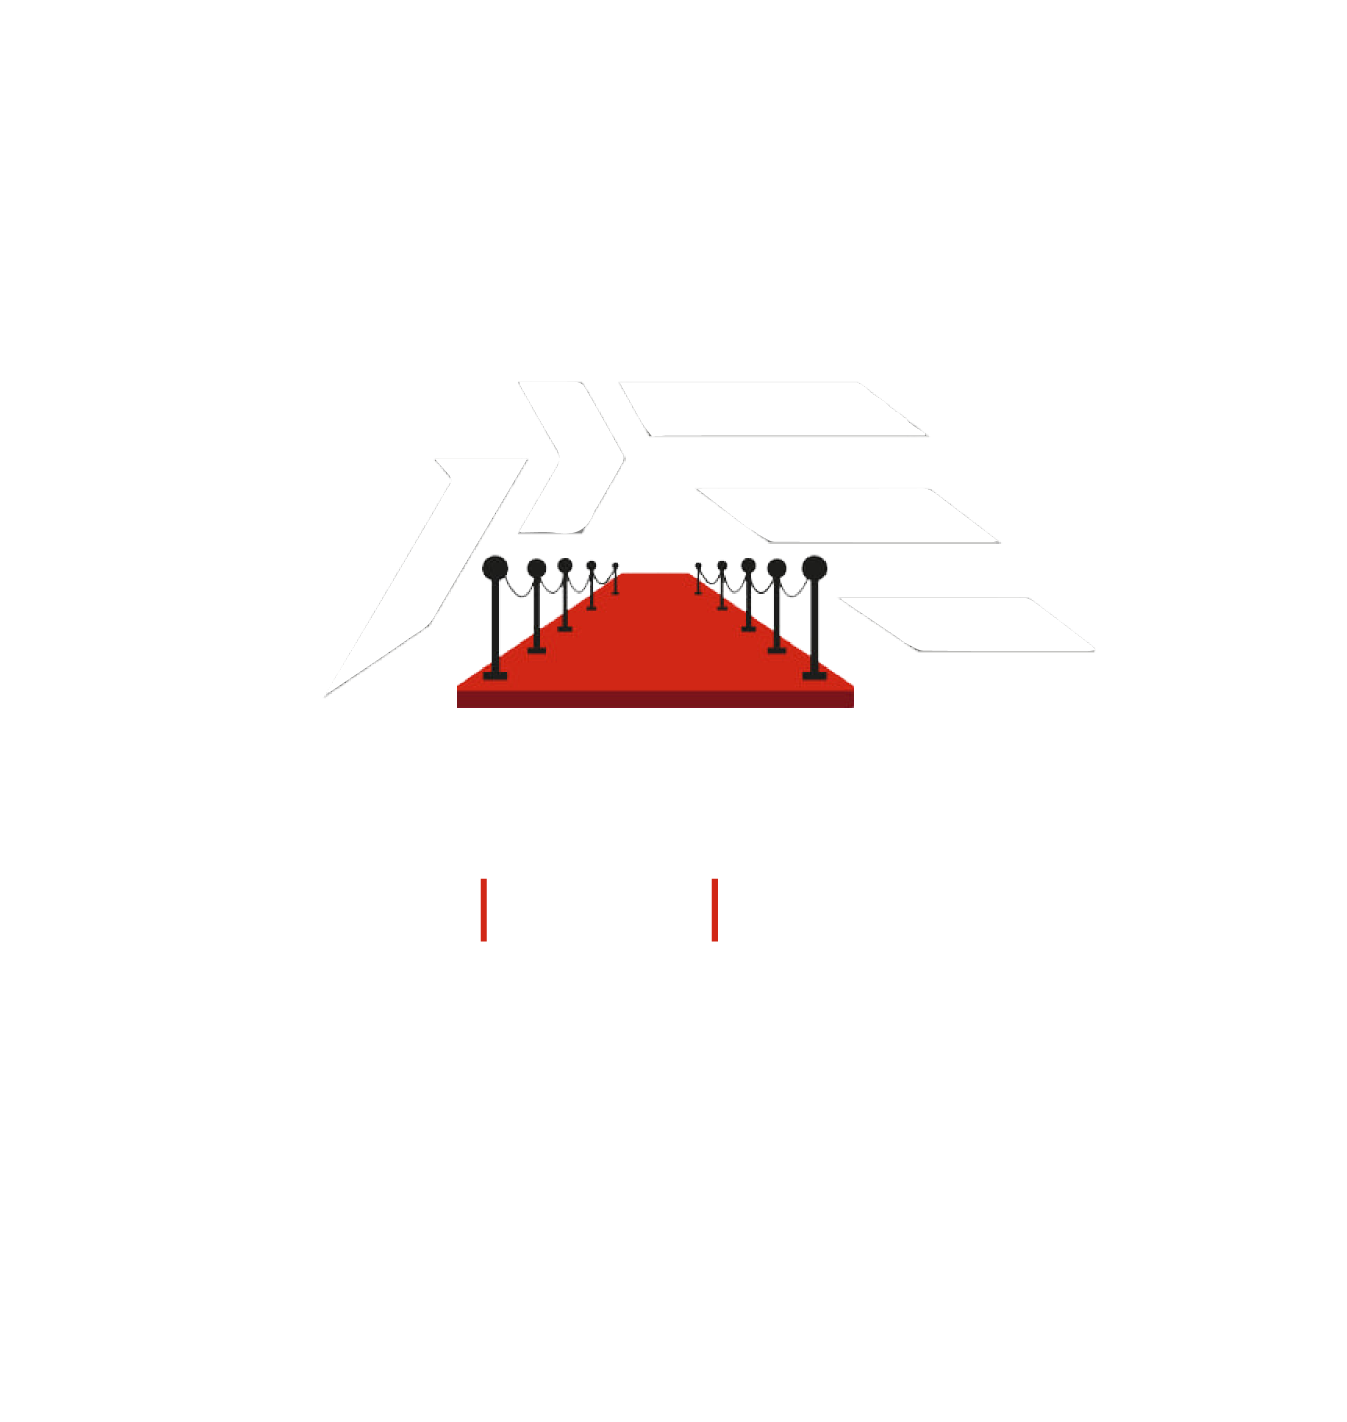 Pro Events Addis PLC